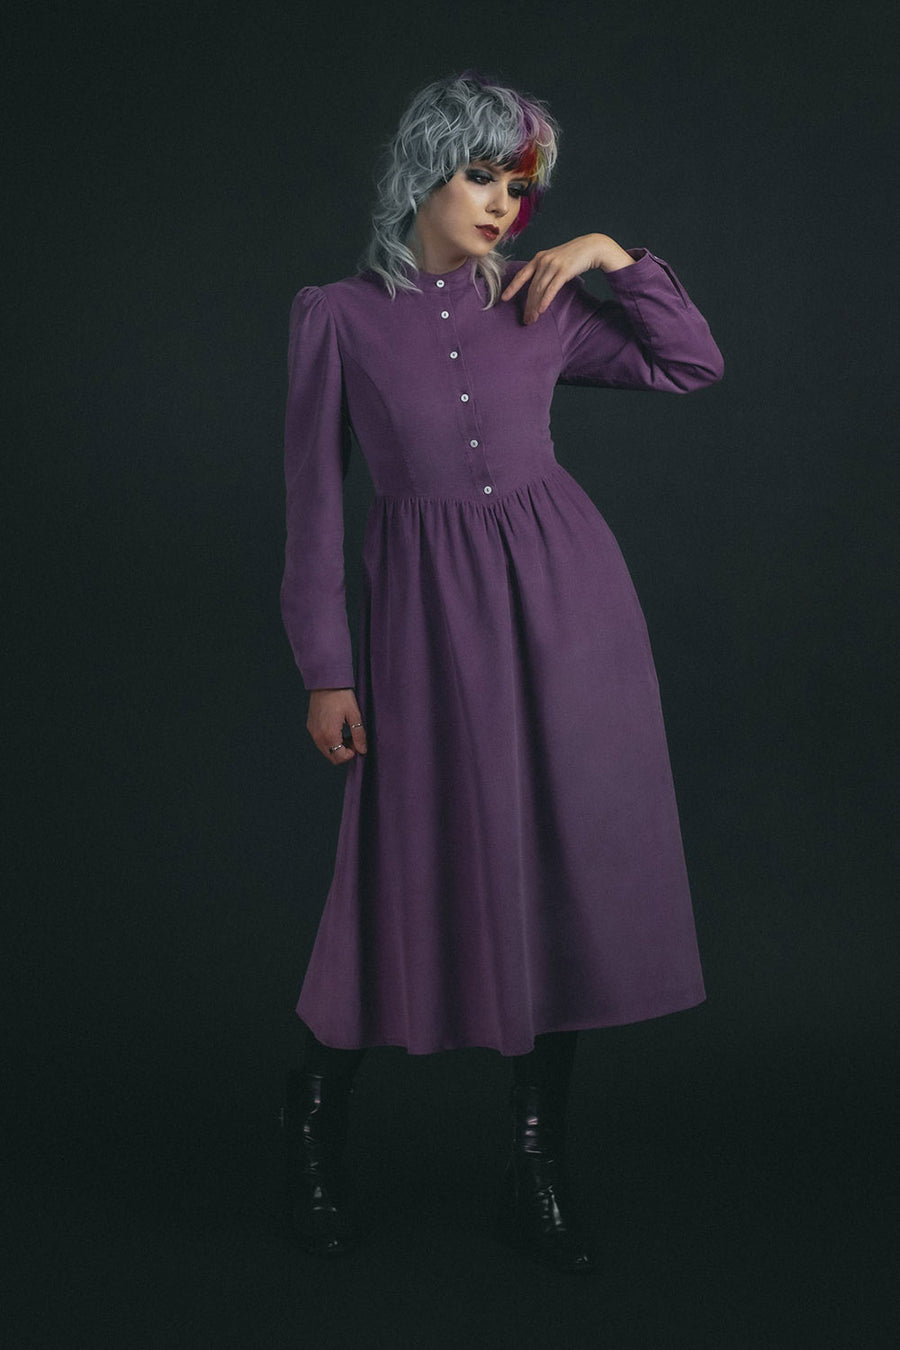 Edwardian goth dress